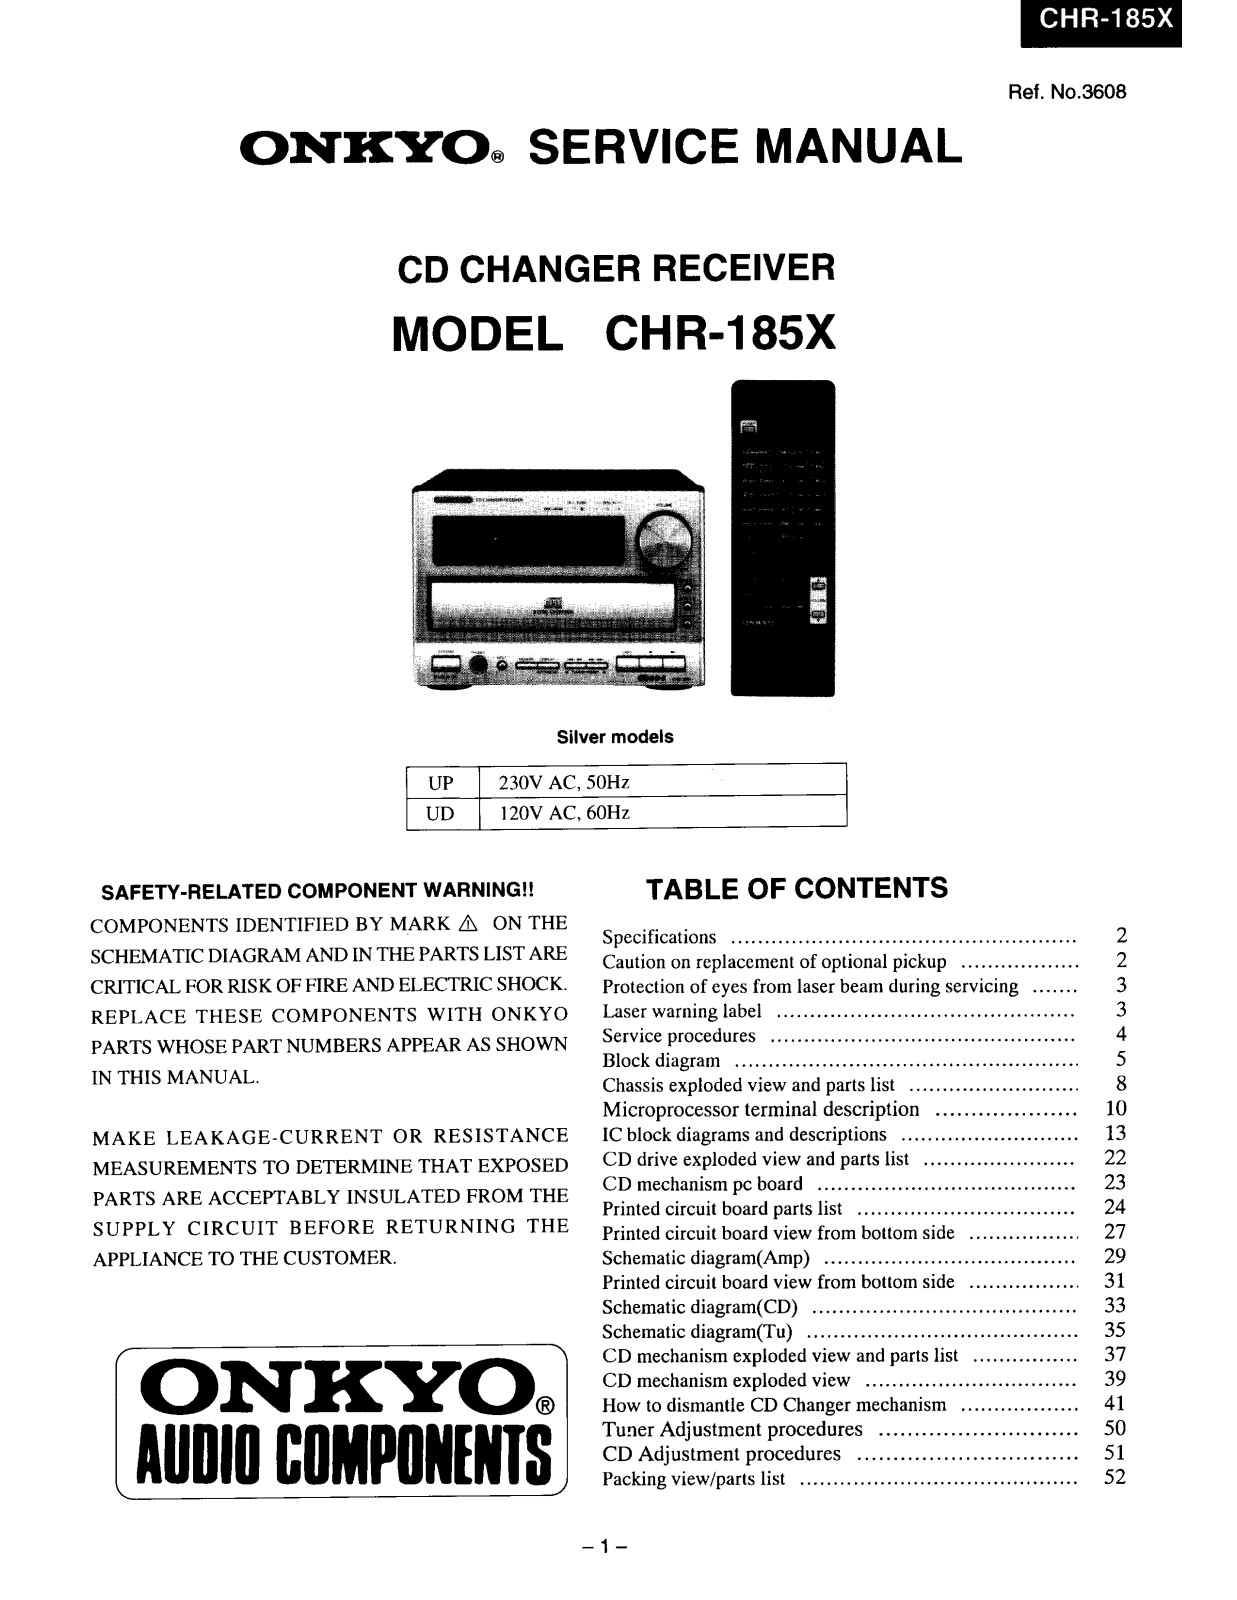 Onkyo CR-185-X Service Manual